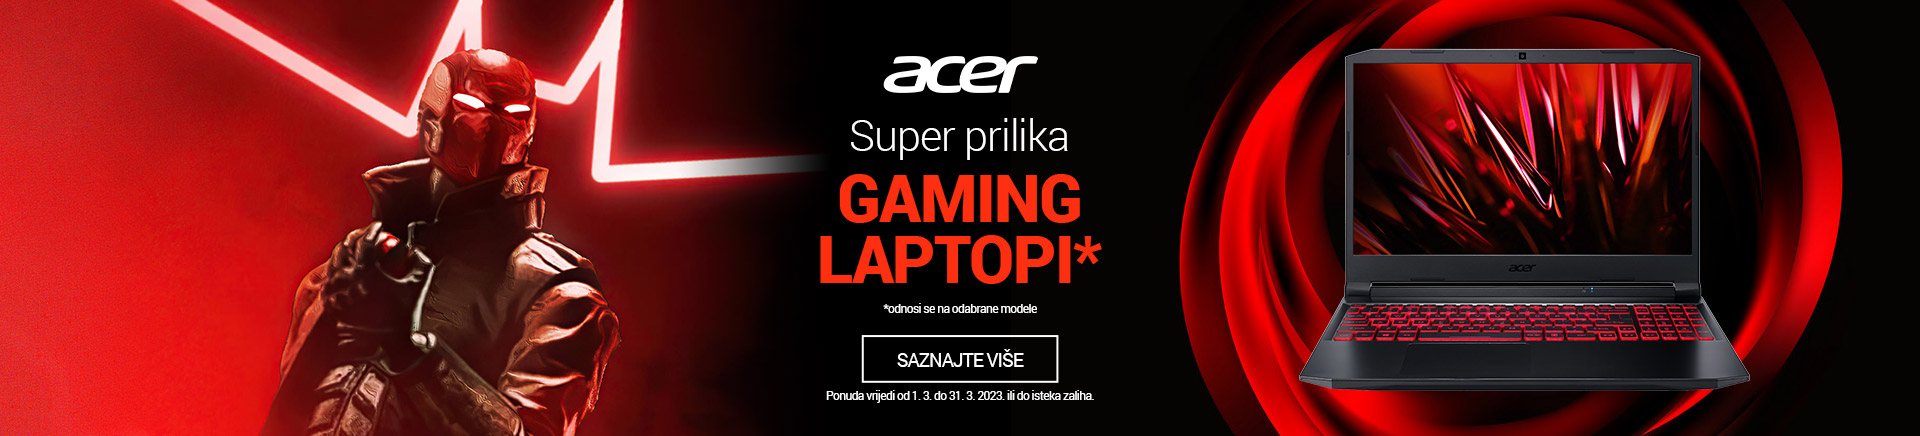 HR Super prilika Acer gaming laptopi MOBILE 380 X 436.jpg